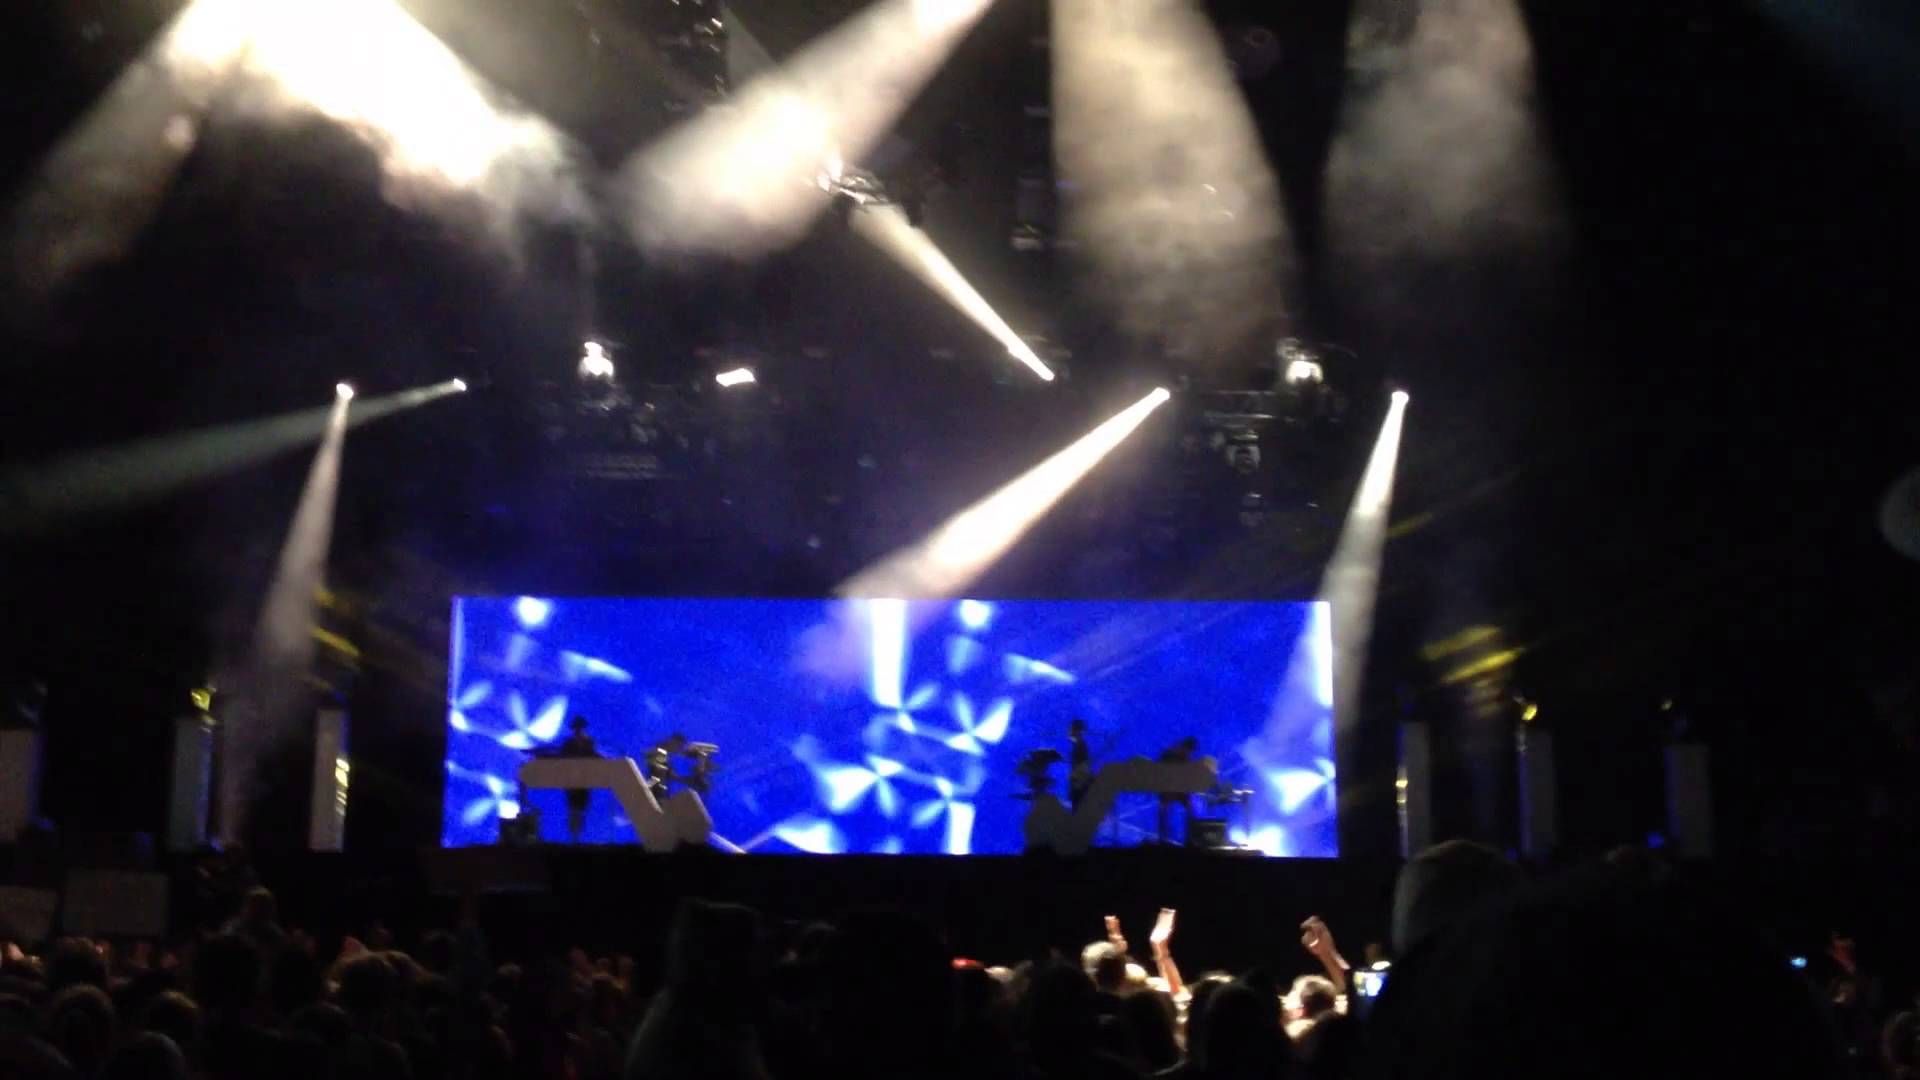 Stromae @ Rock Werchter 2014 - 0707 0015-0115 Main Stage - Full Concert